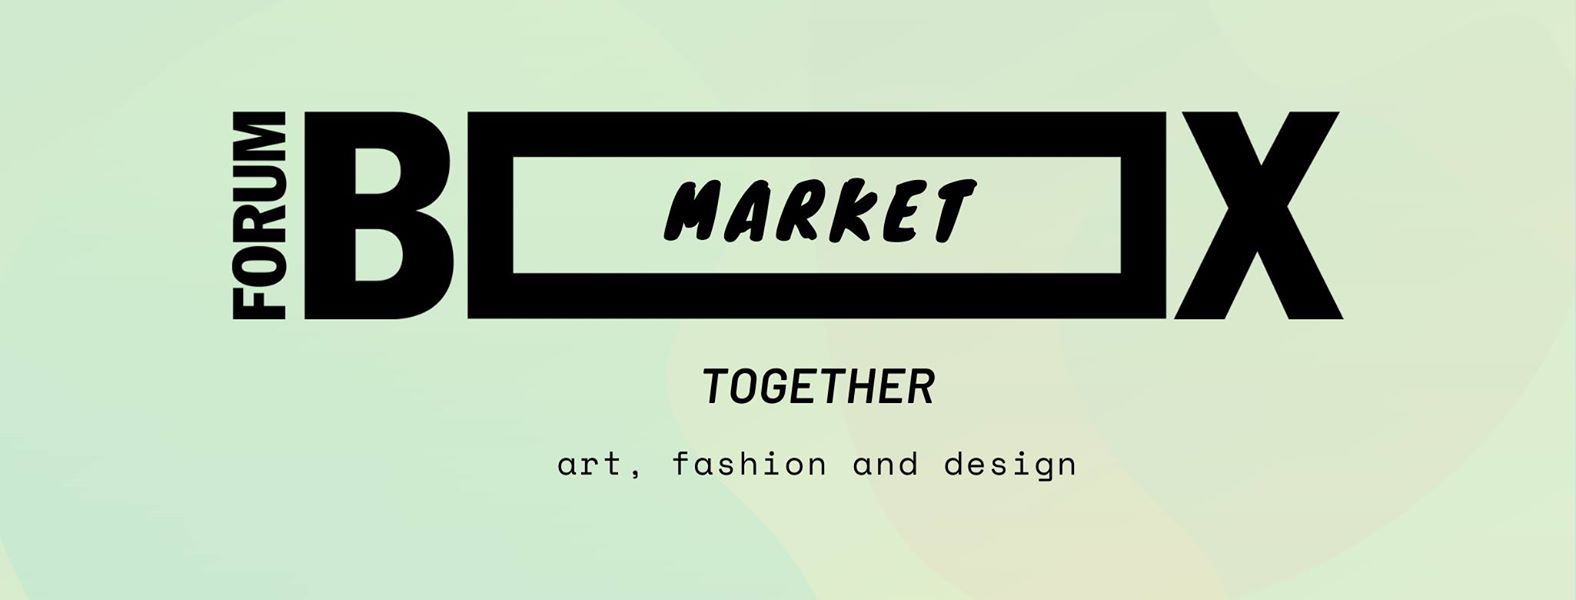 Forum Box Market Together – Art, Fashion and Design